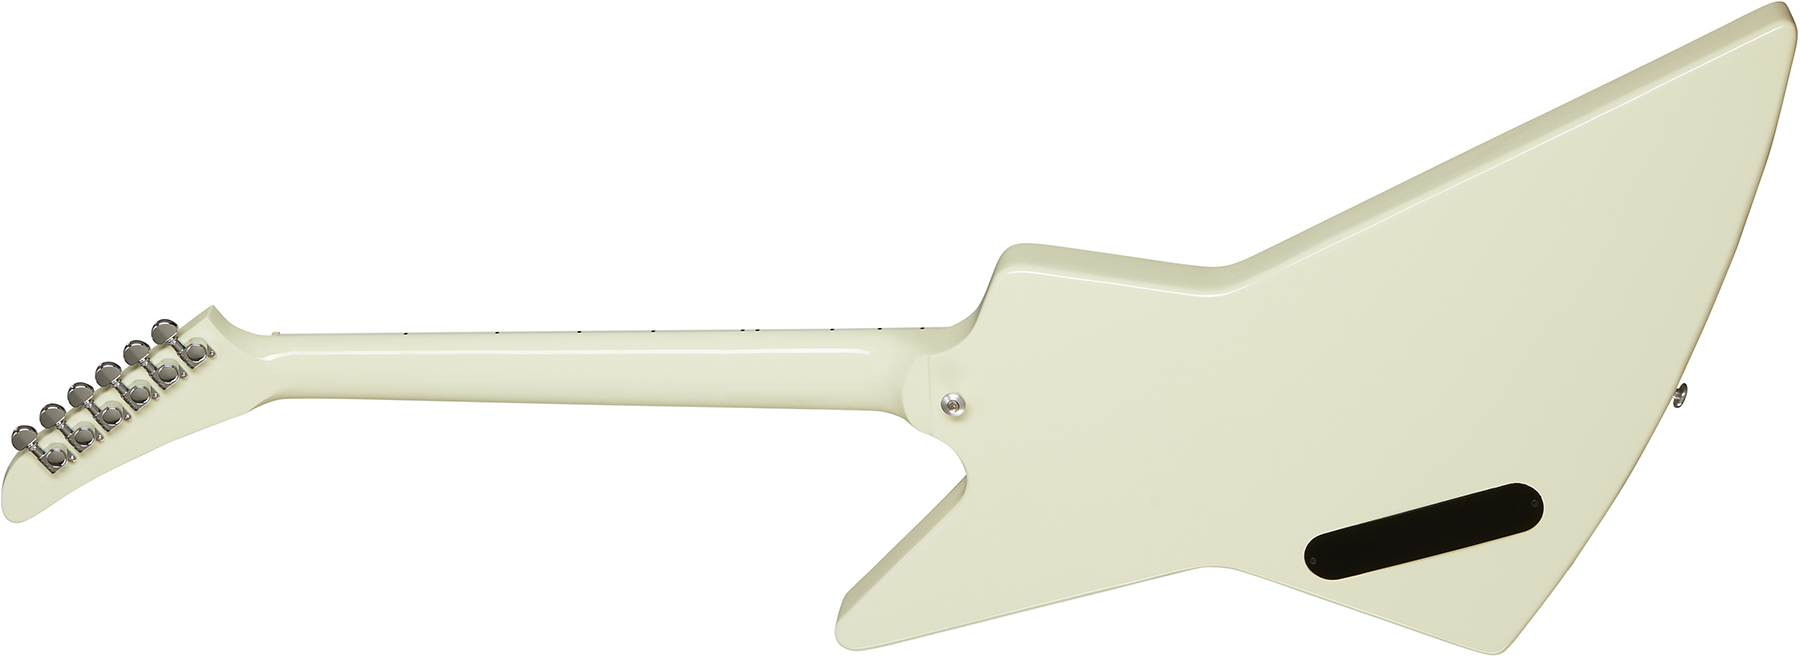 Gibson Explorer 70s Original 2h Ht Rw - Classic White - Guitarra electrica retro rock - Variation 1